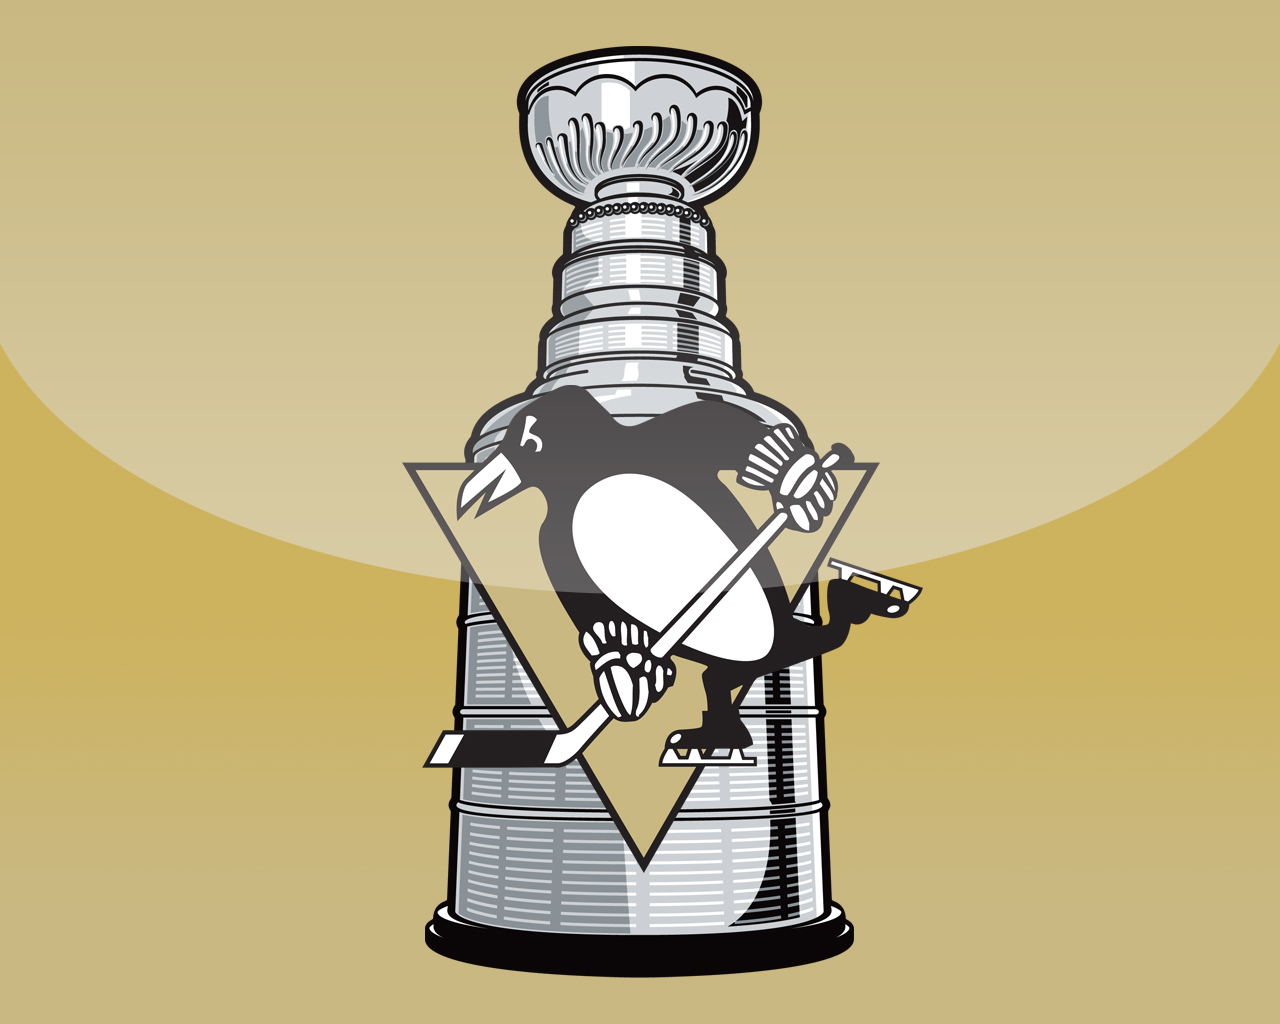 Penguins_Cup_08_by_Bruins4Life.jpg